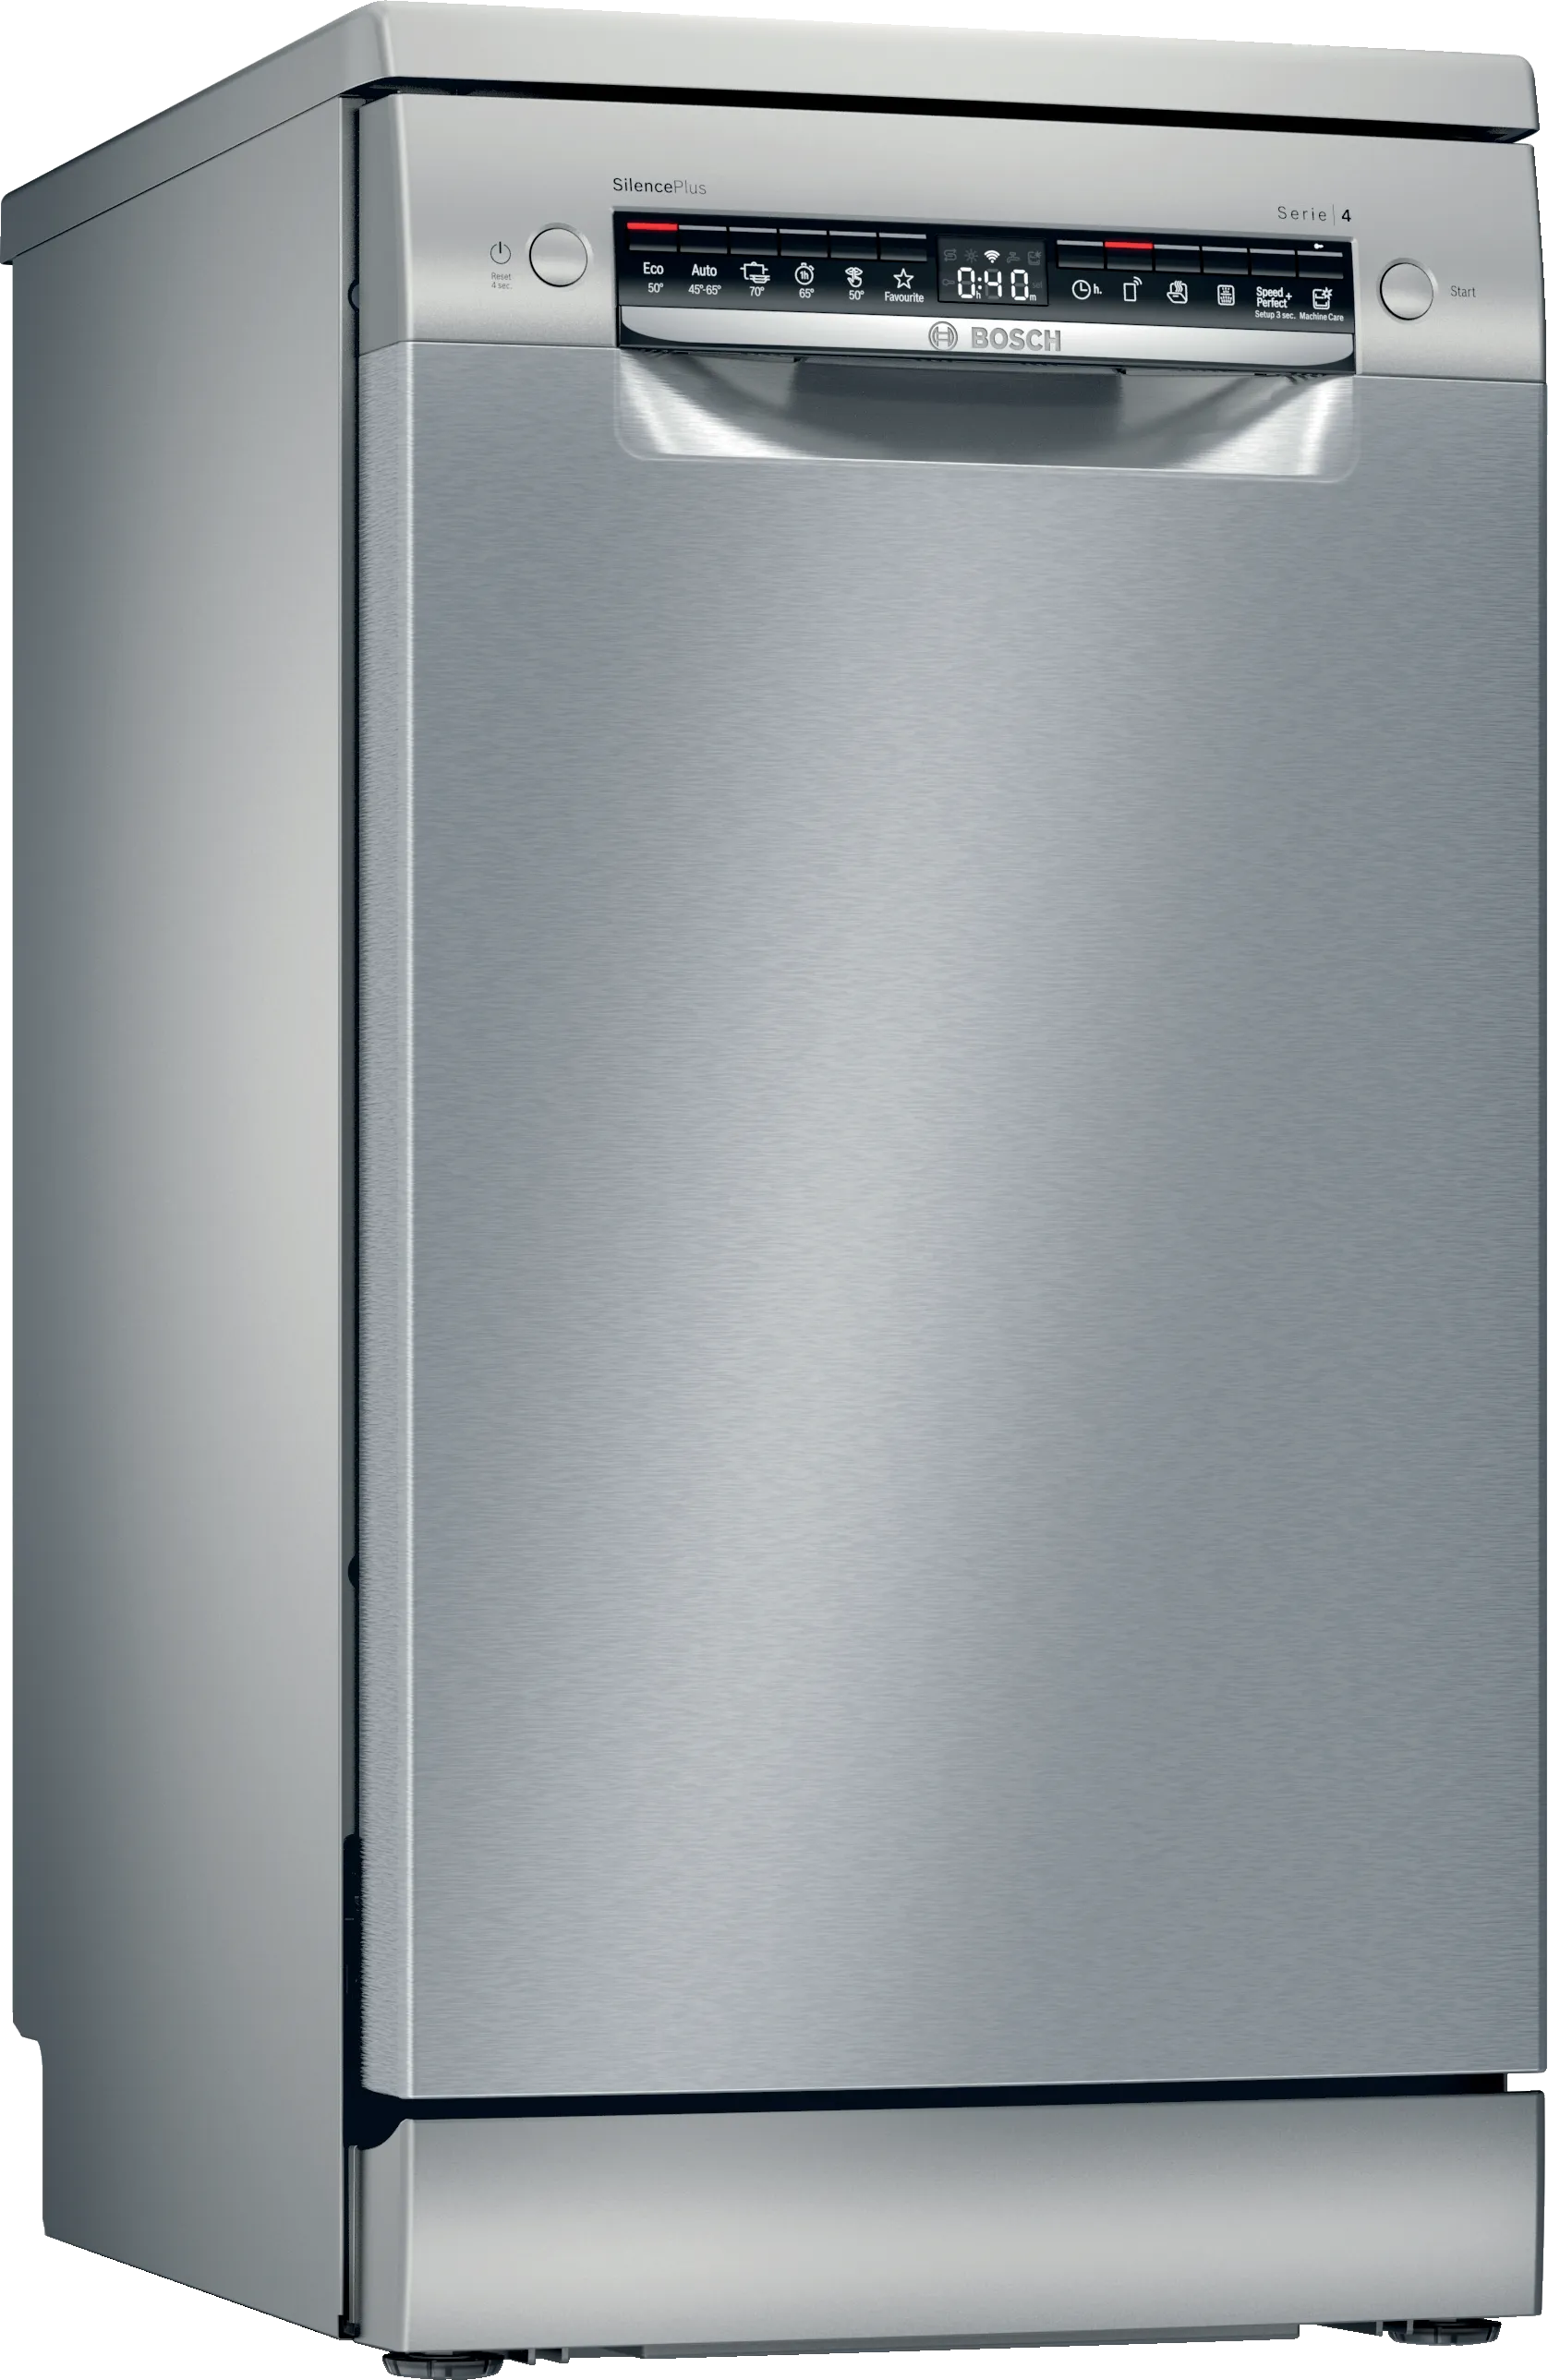 Series 4 free-standing dishwasher 45 cm silver inox 